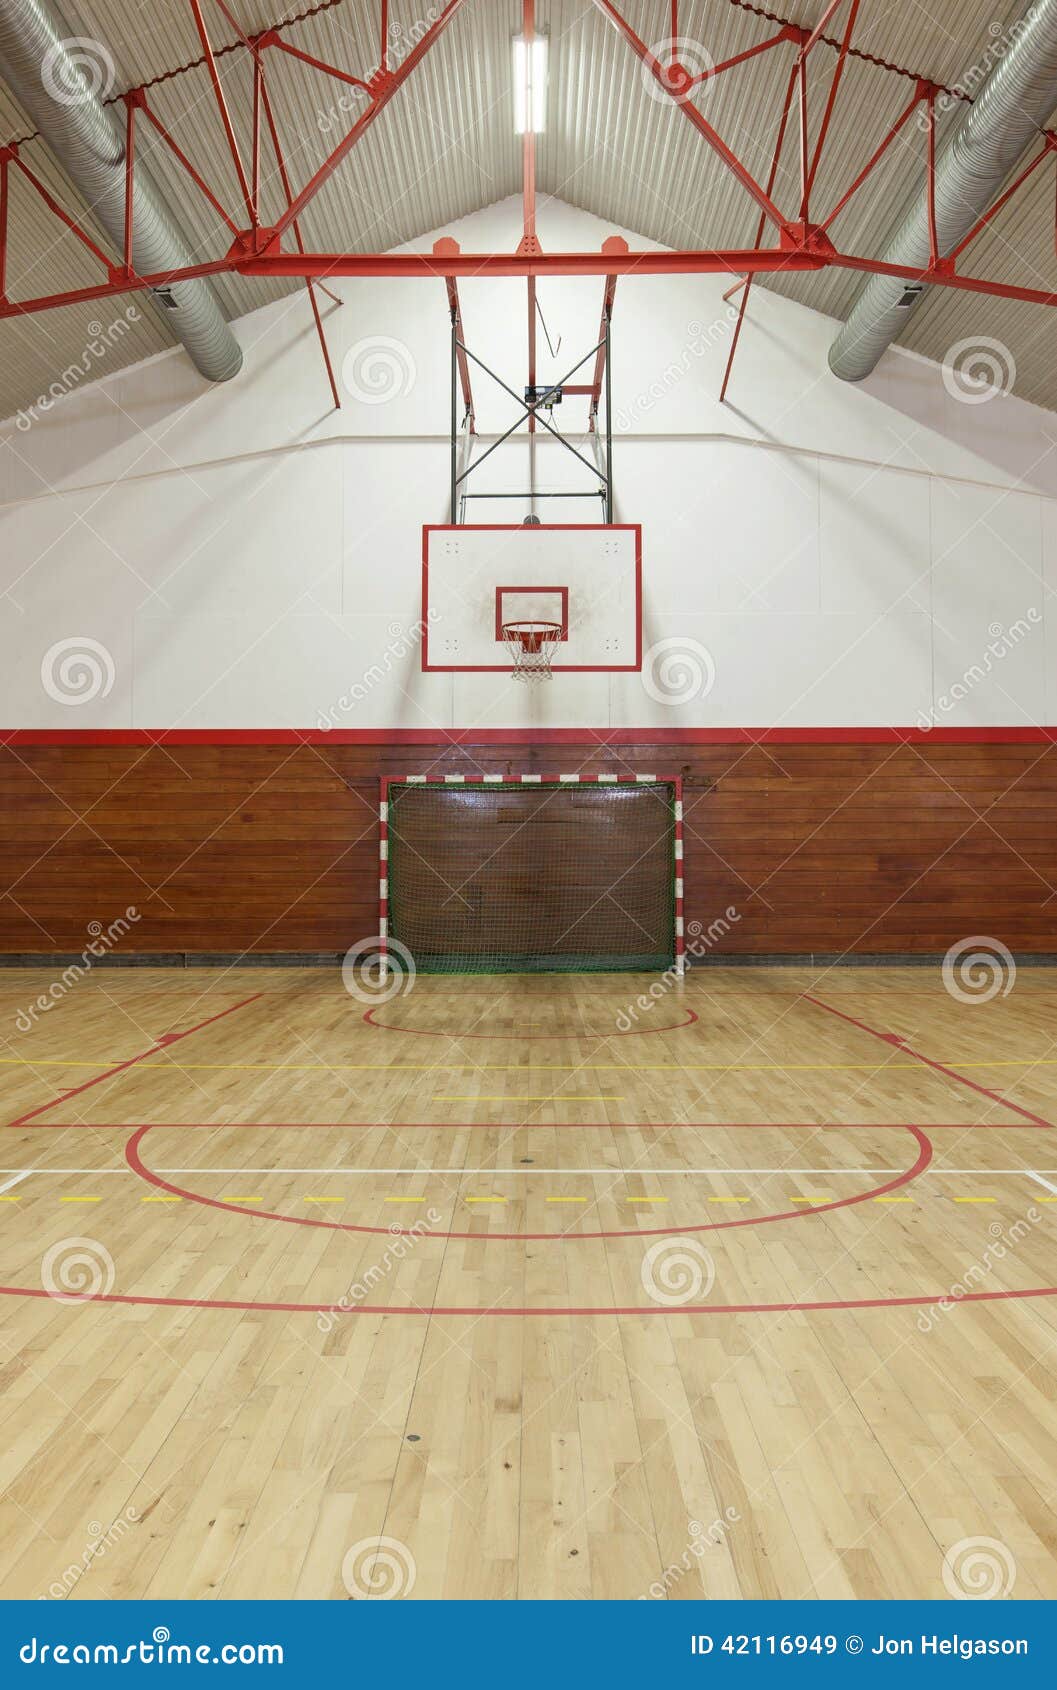 Retro Indoor Gymnasium Stock Image Image Of Recreation 42116949